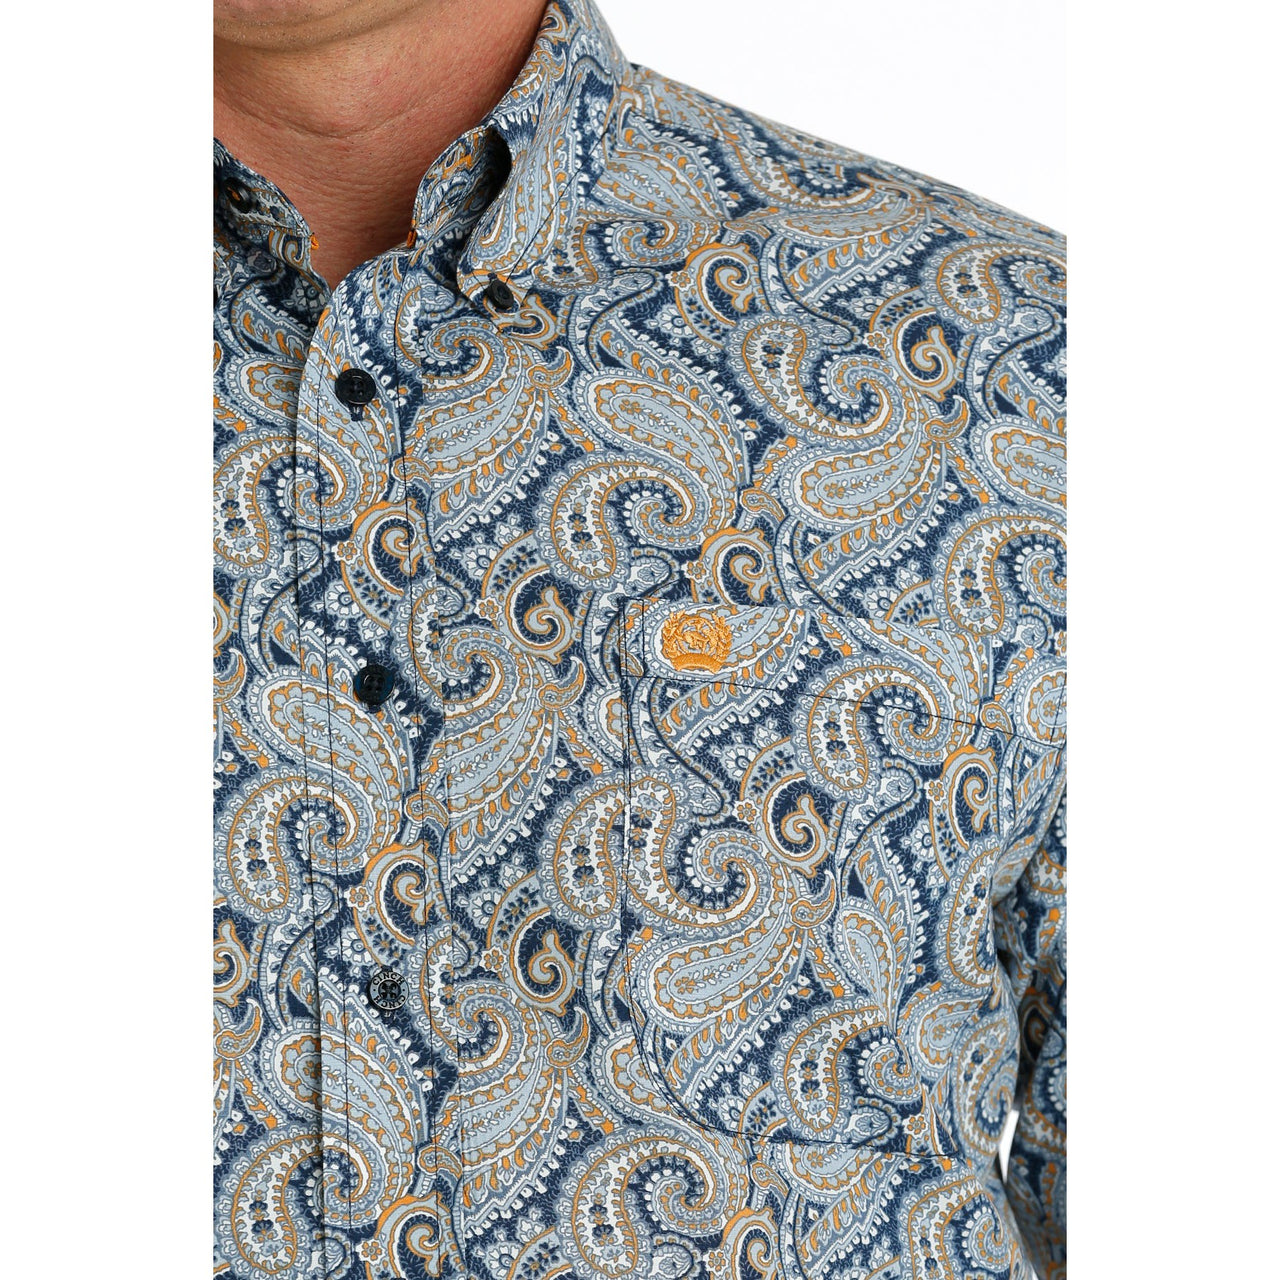 Cinch Men's Long Sleeve Paisley Print Button Down Shirt - Blue/Gold Multi